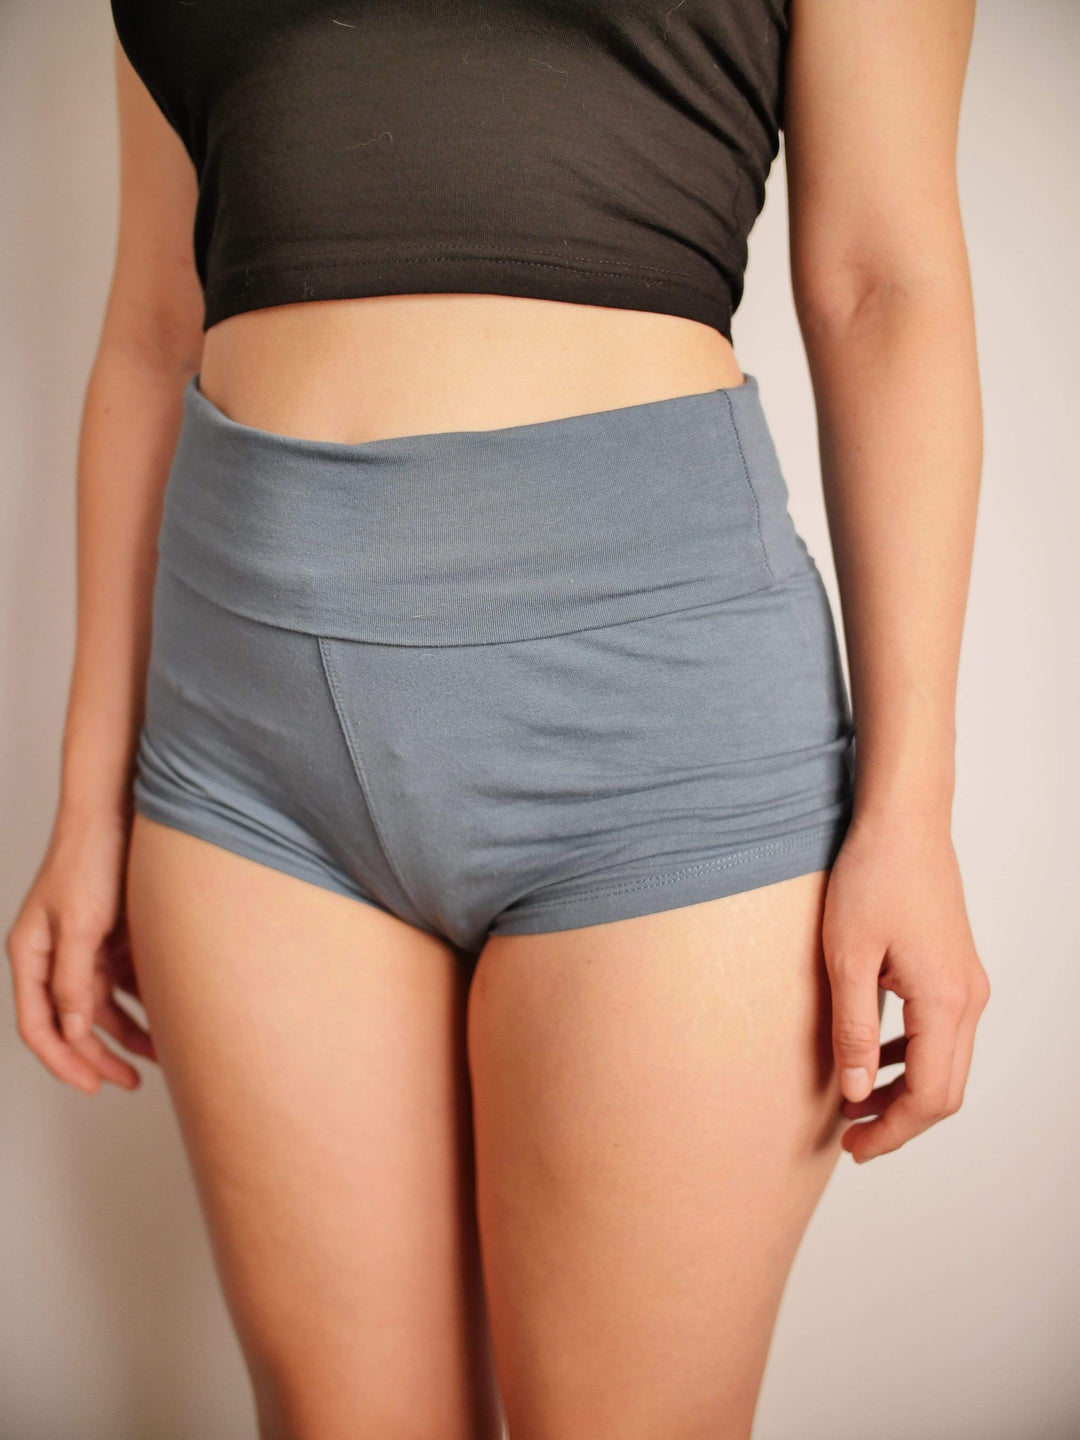 PixelThat Punderwear Yoga Shorts You're Gonna Wreck It Yoga Shorts/Pants